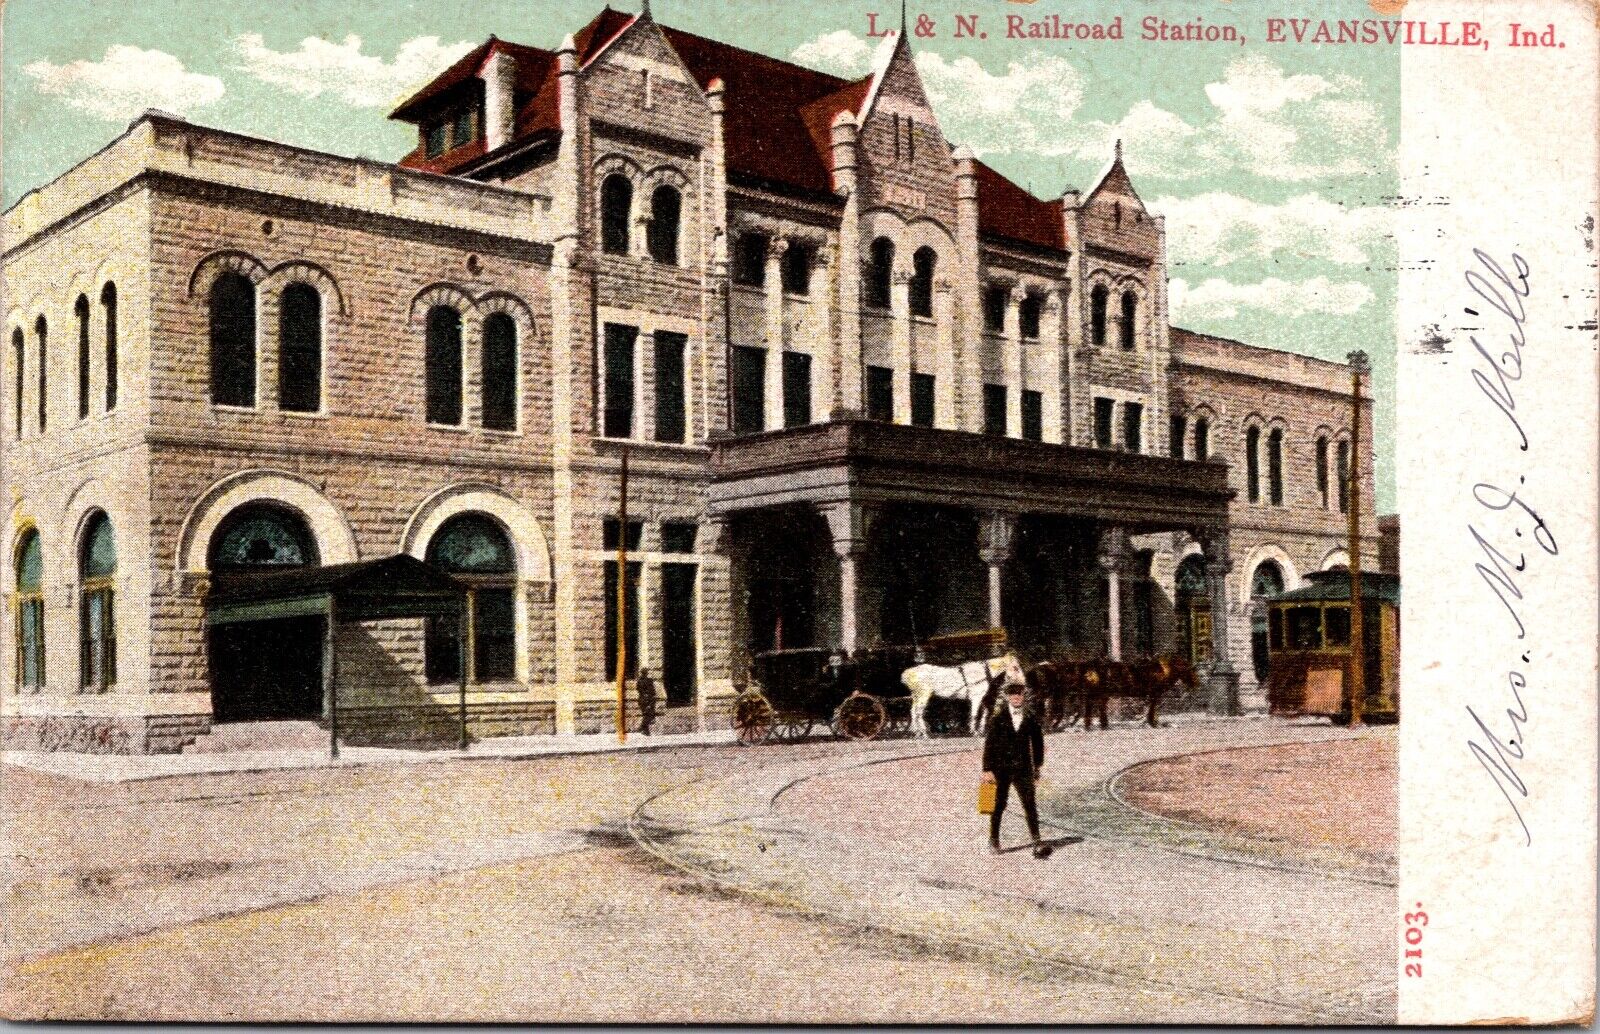 Postcard L. & N. Railroad Station in Evansville, Indiana